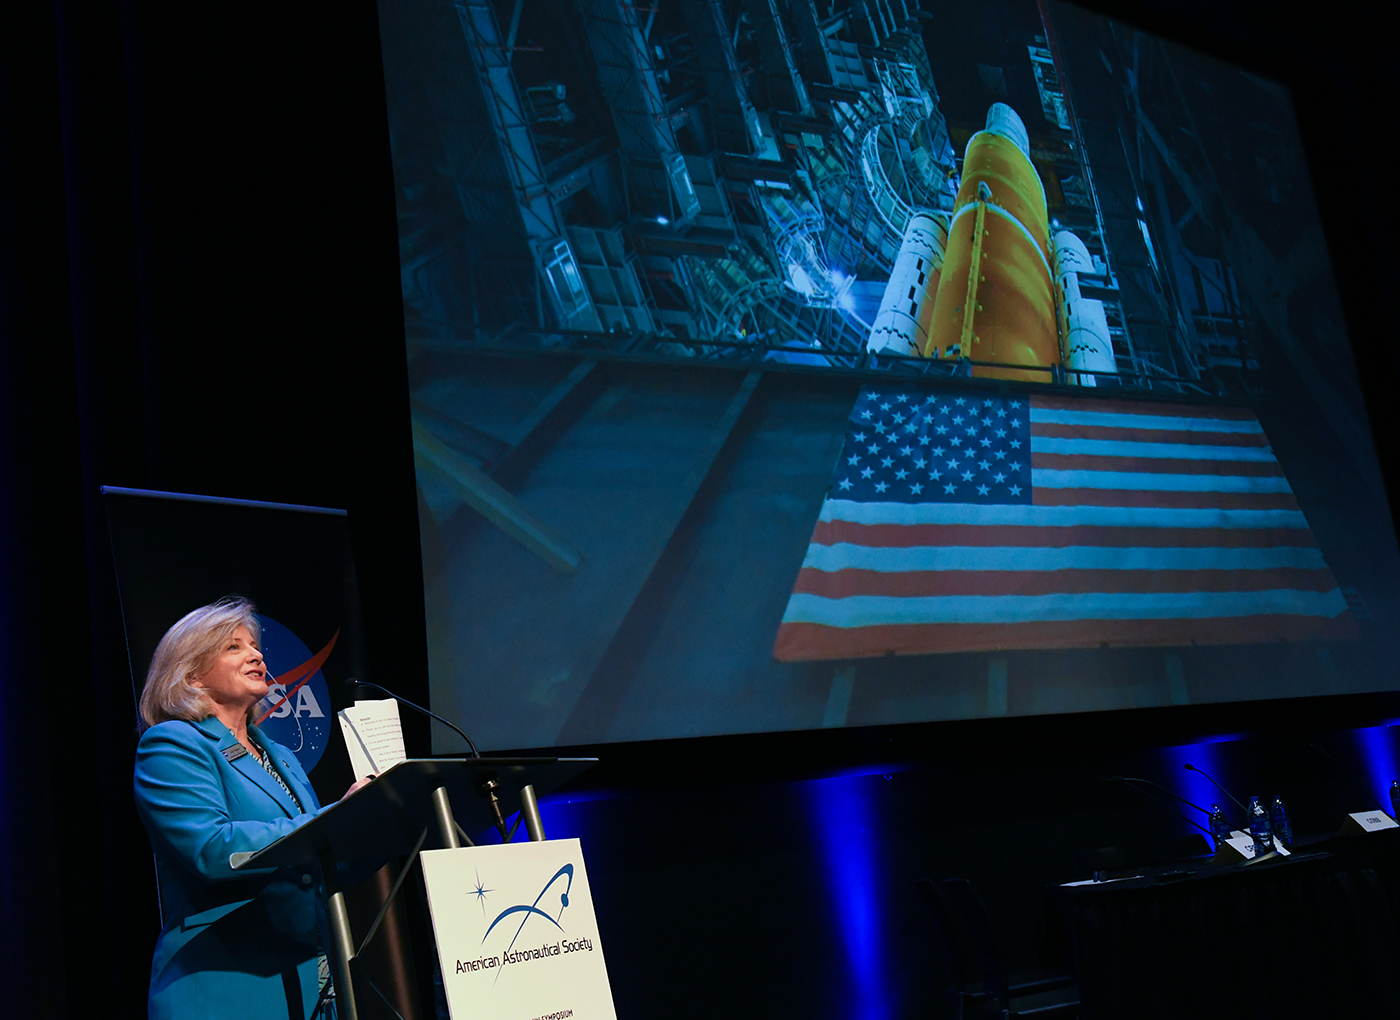 Marshall Director Jody Singer delivers opening remarks at the Wernher von Braun Memorial Symposium Oct. 12.